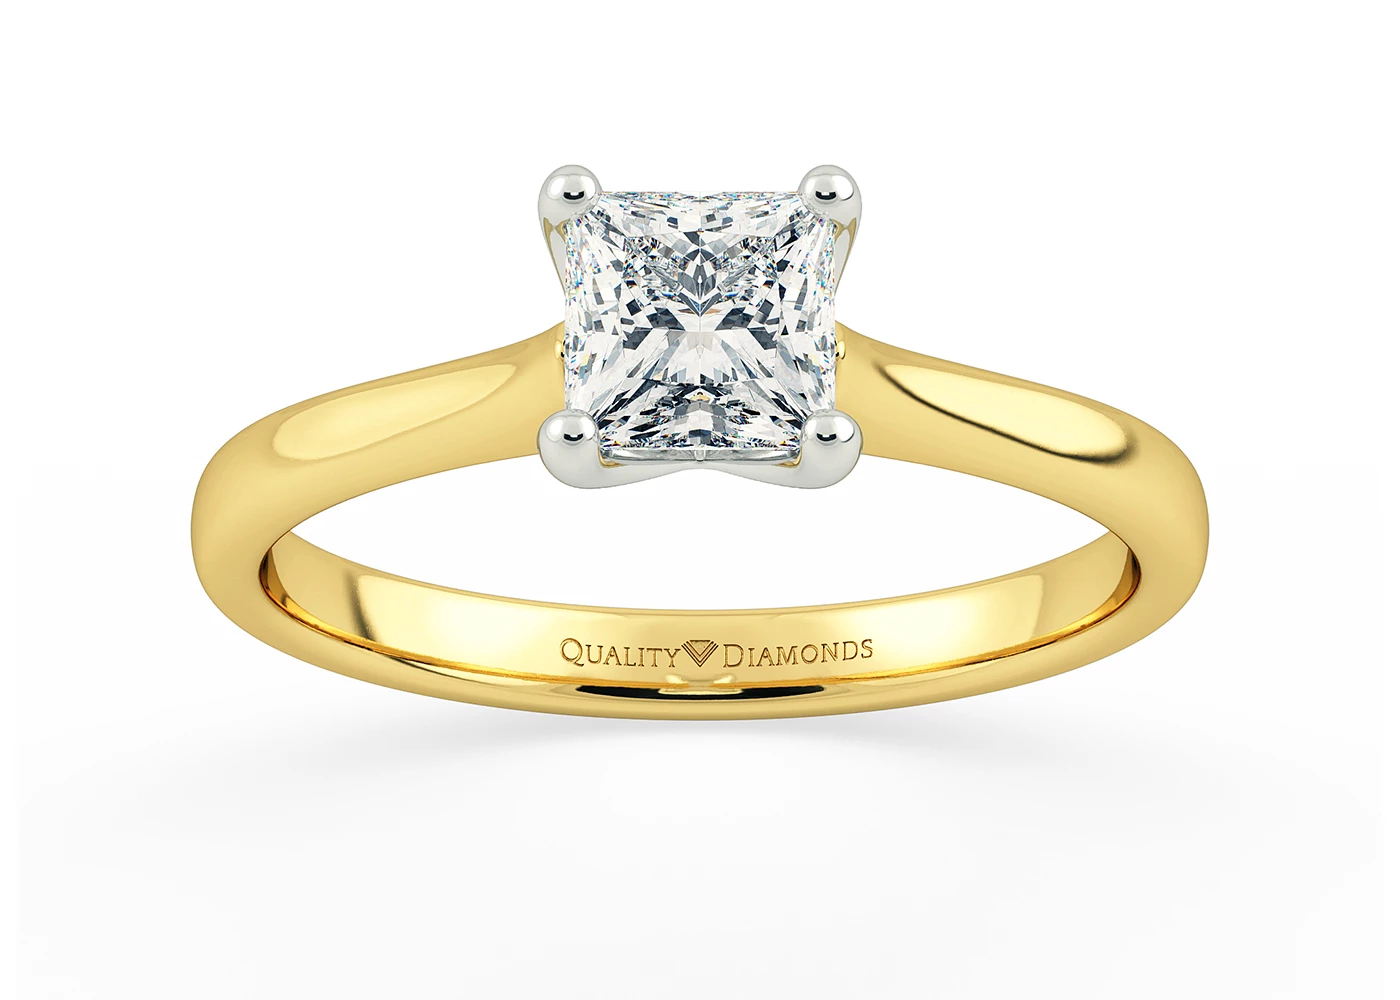 Princess Flor Diamond Ring in 18K Yellow Gold